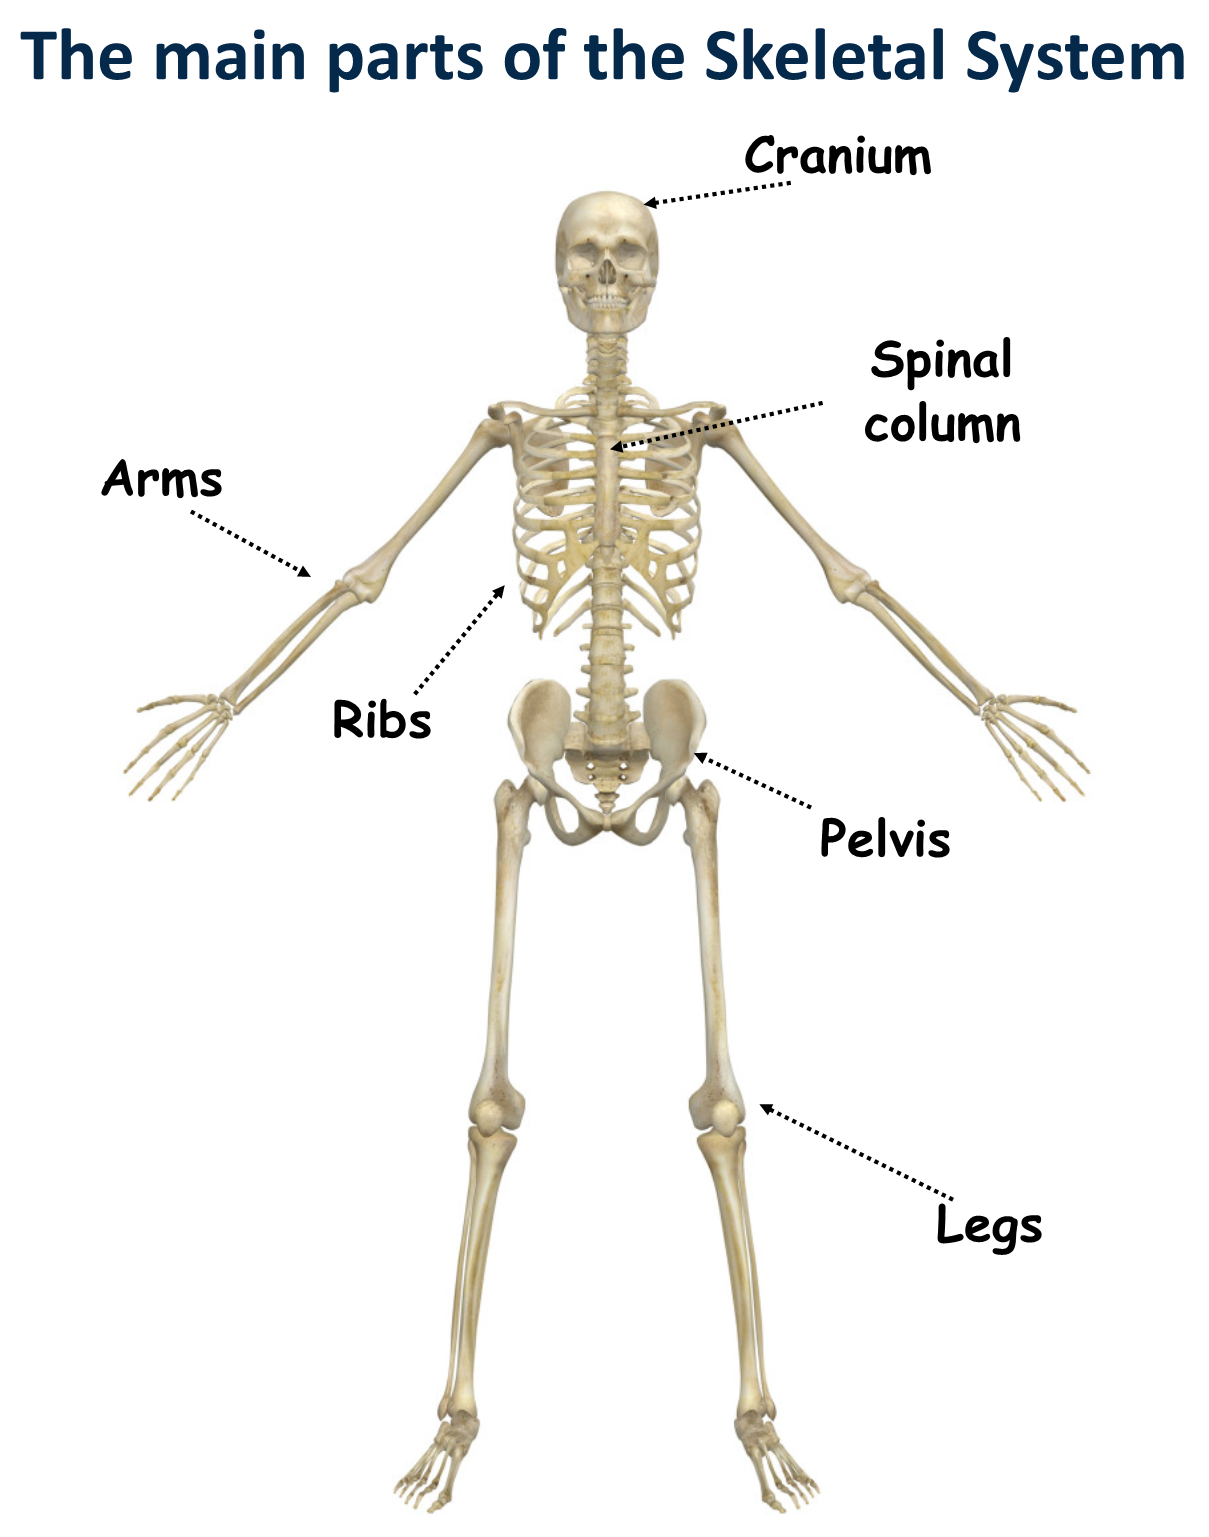 The Skeletal System Canadiensschool